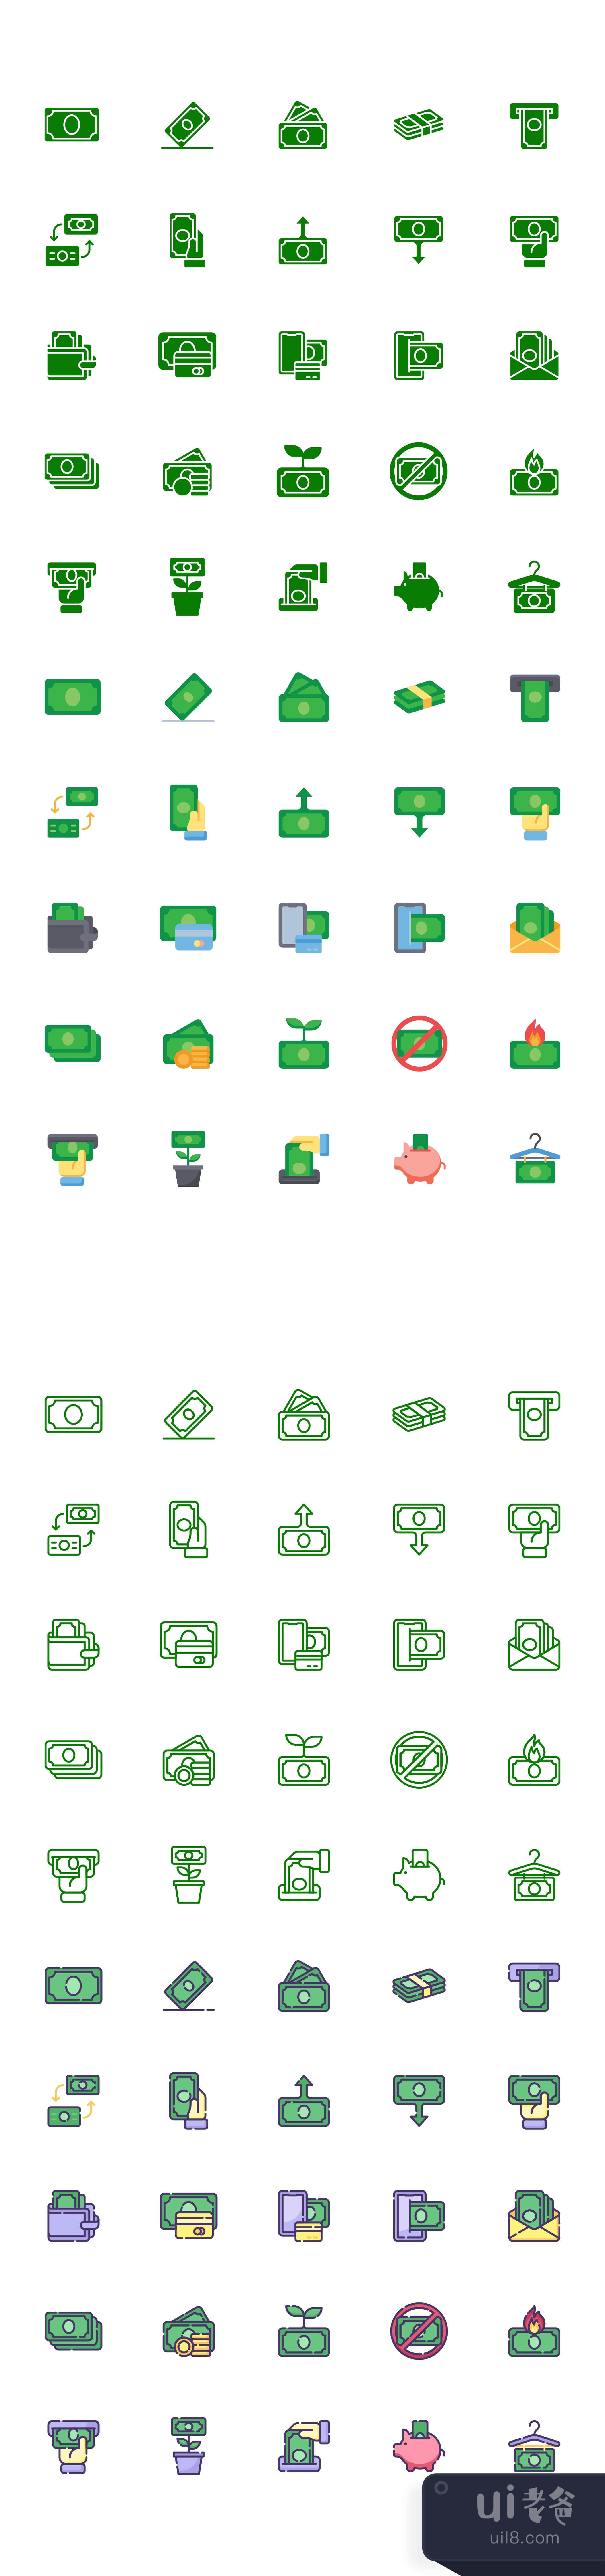 货币图标包 (Money Icons Pack)插图1